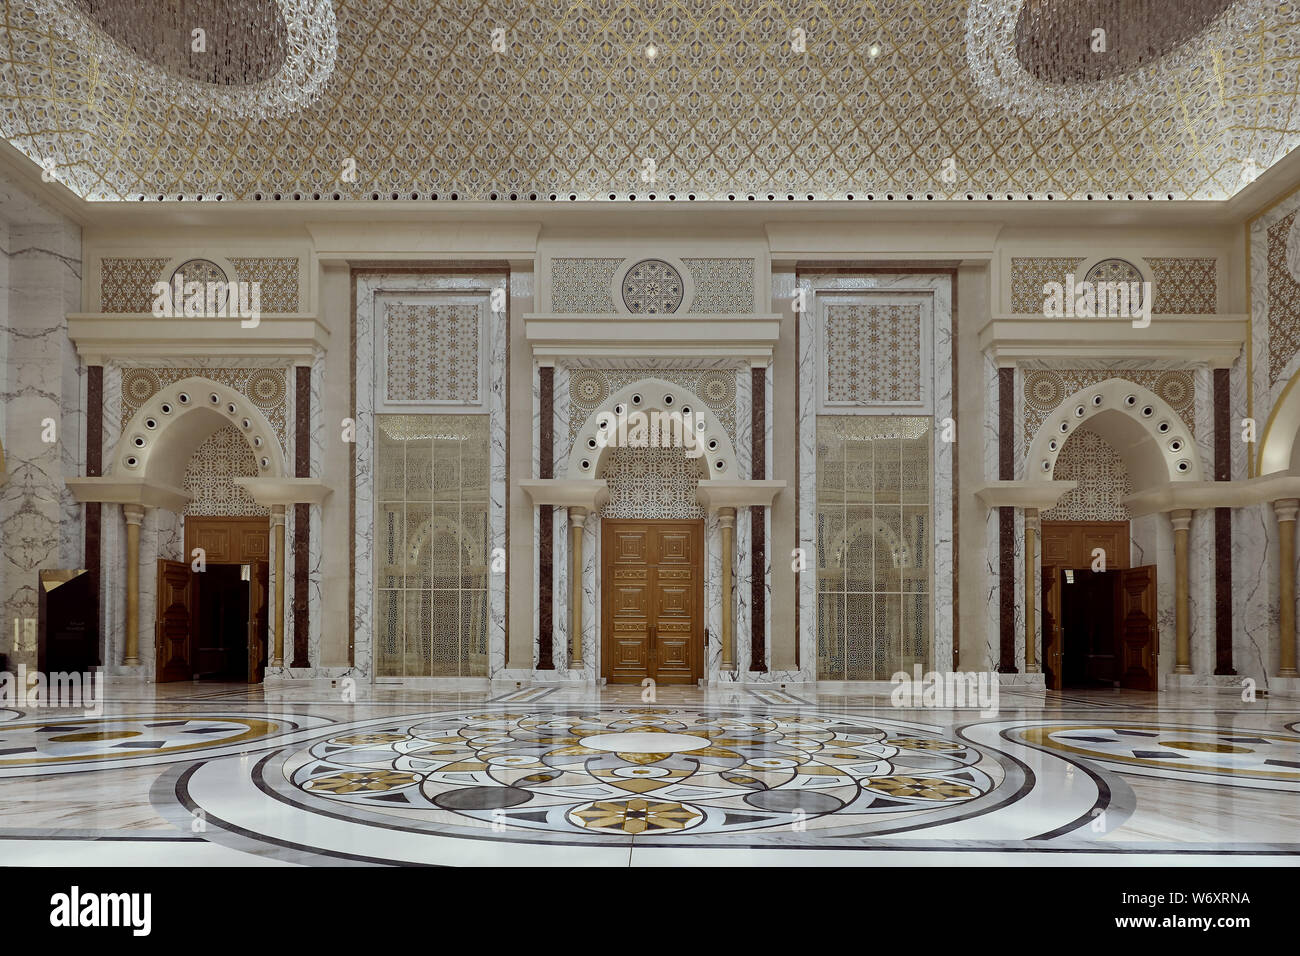 Qasr Al Watan [Palace of the Nation] Abu Dhabi - Interior view II Stock Photo